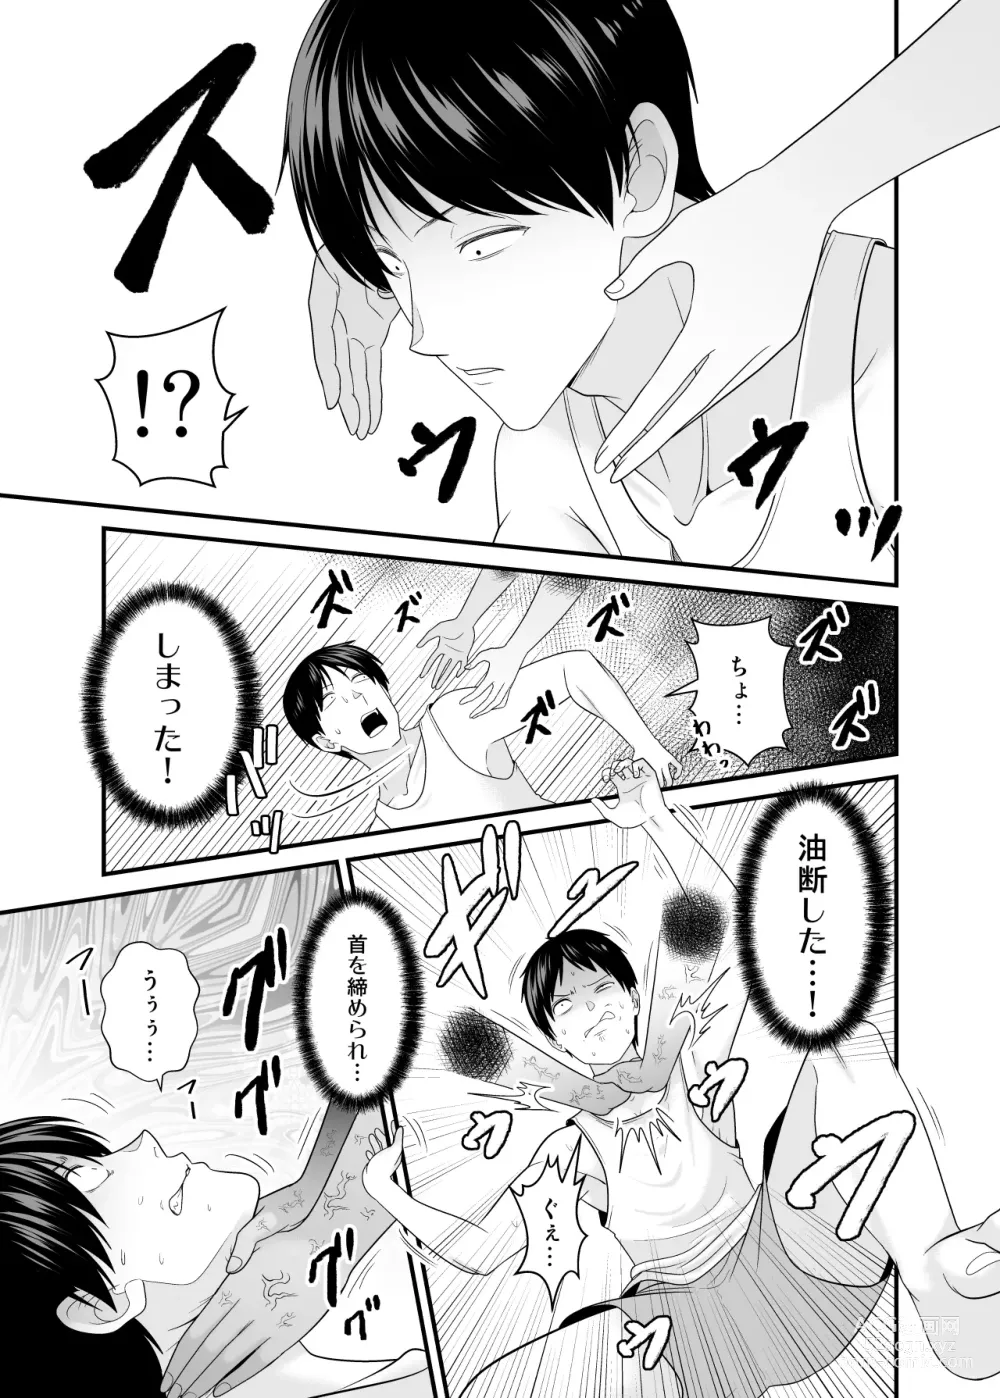 Page 14 of doujinshi ヤバい事故物件に女幽霊が出たけど無職底辺の俺はセックスしまくる